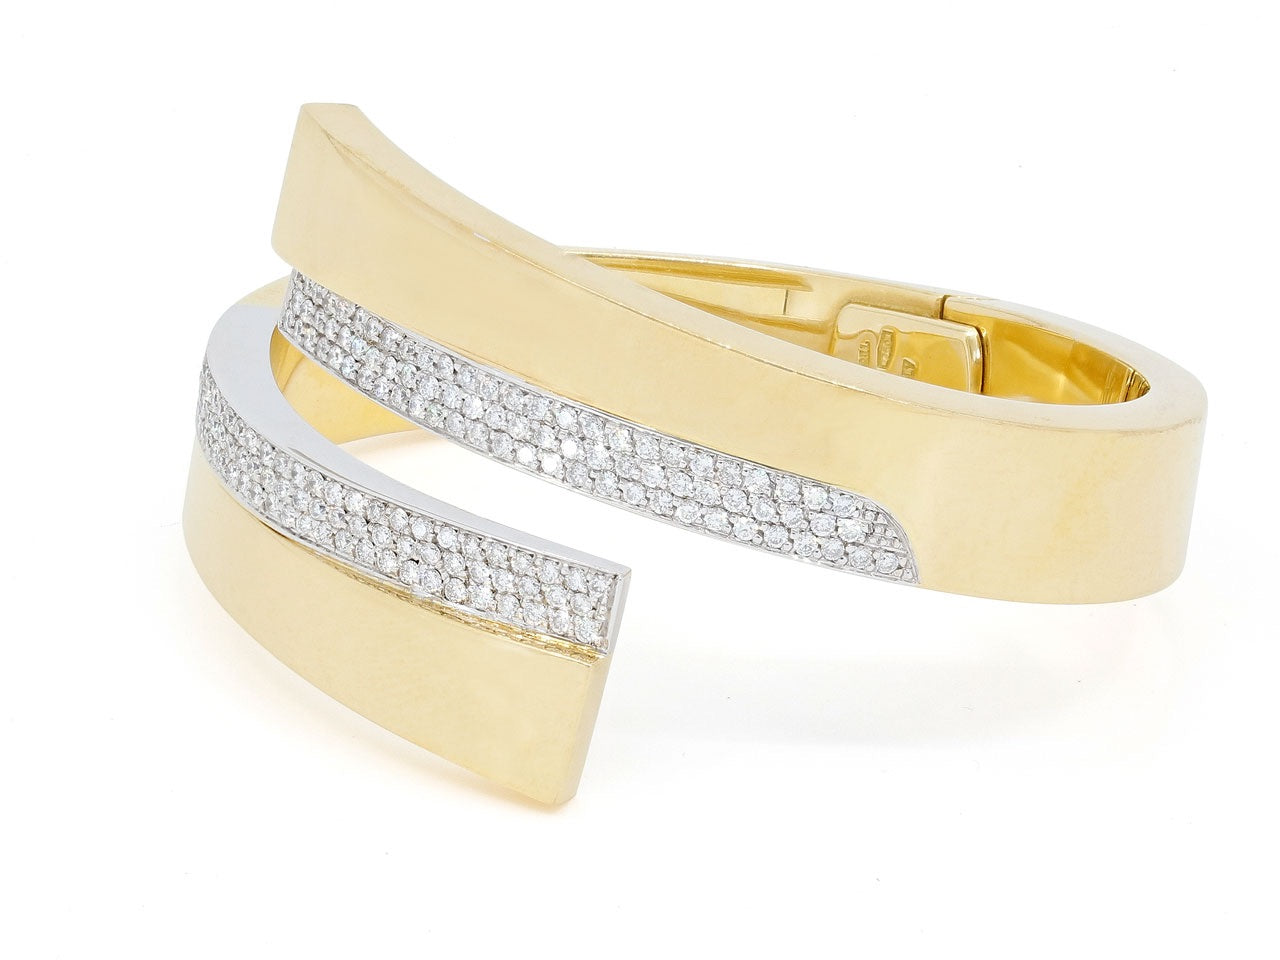 Vintage Carlo Weingrill Diamond Bangle Bracelet in 18K